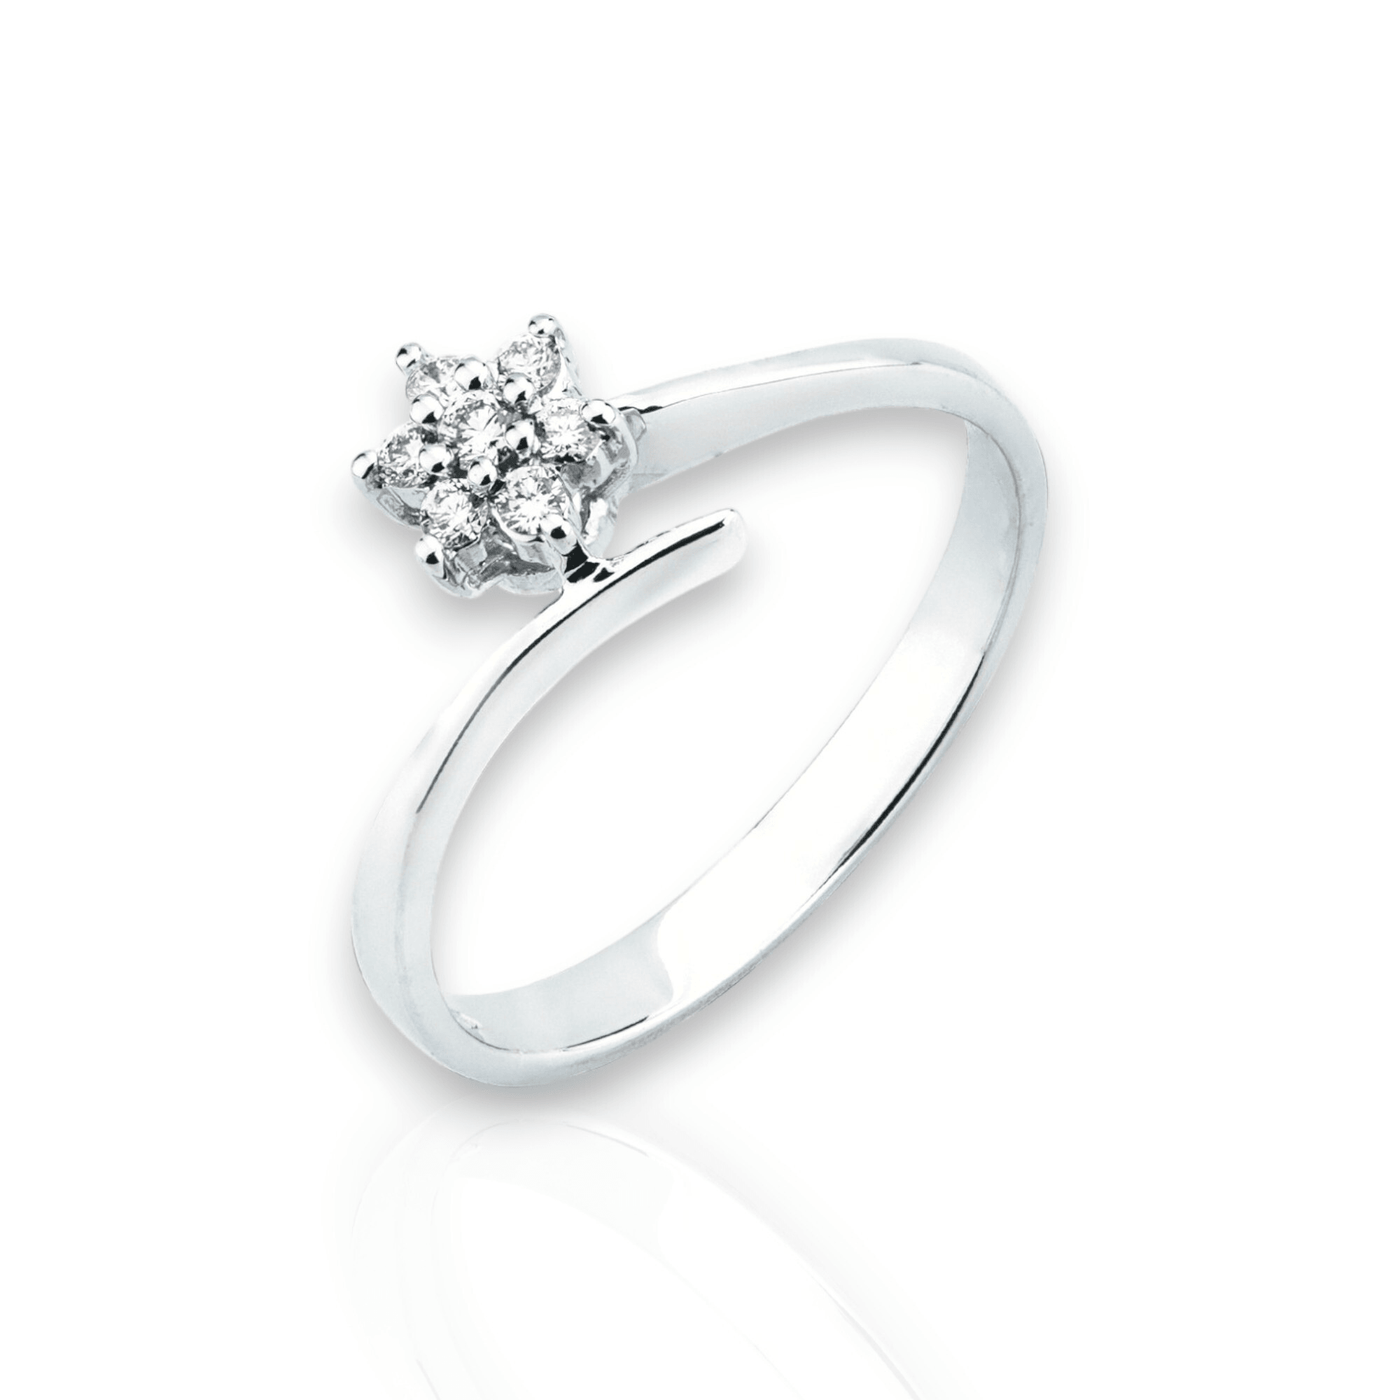 Flower Ring with 0.11ct diamonds - Moregola Fine Jewelry